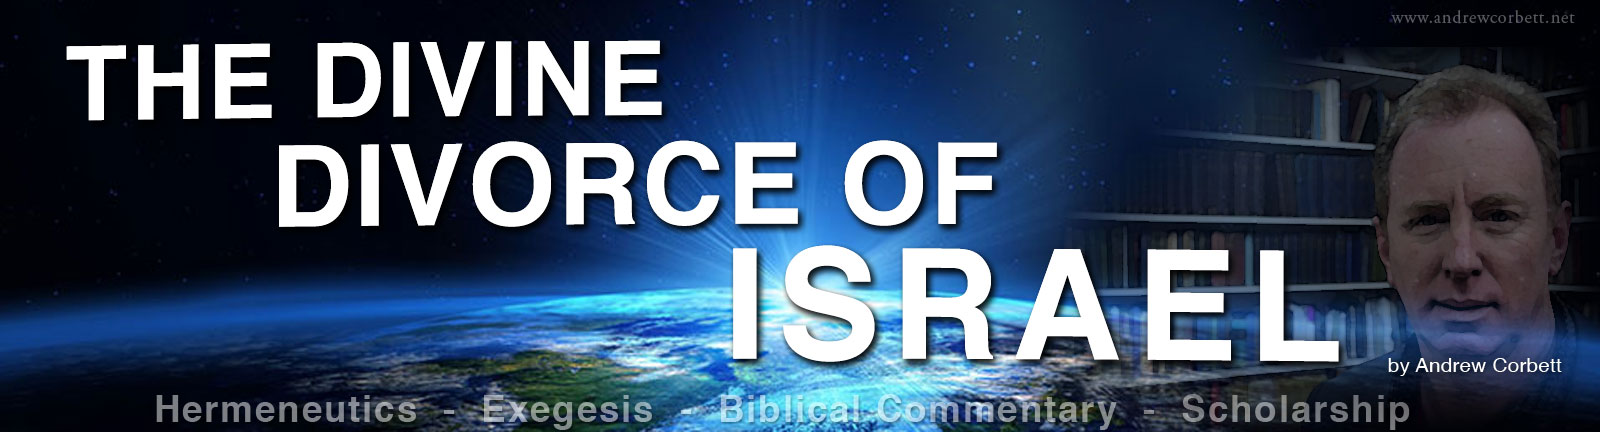 The divine divorce of Israel